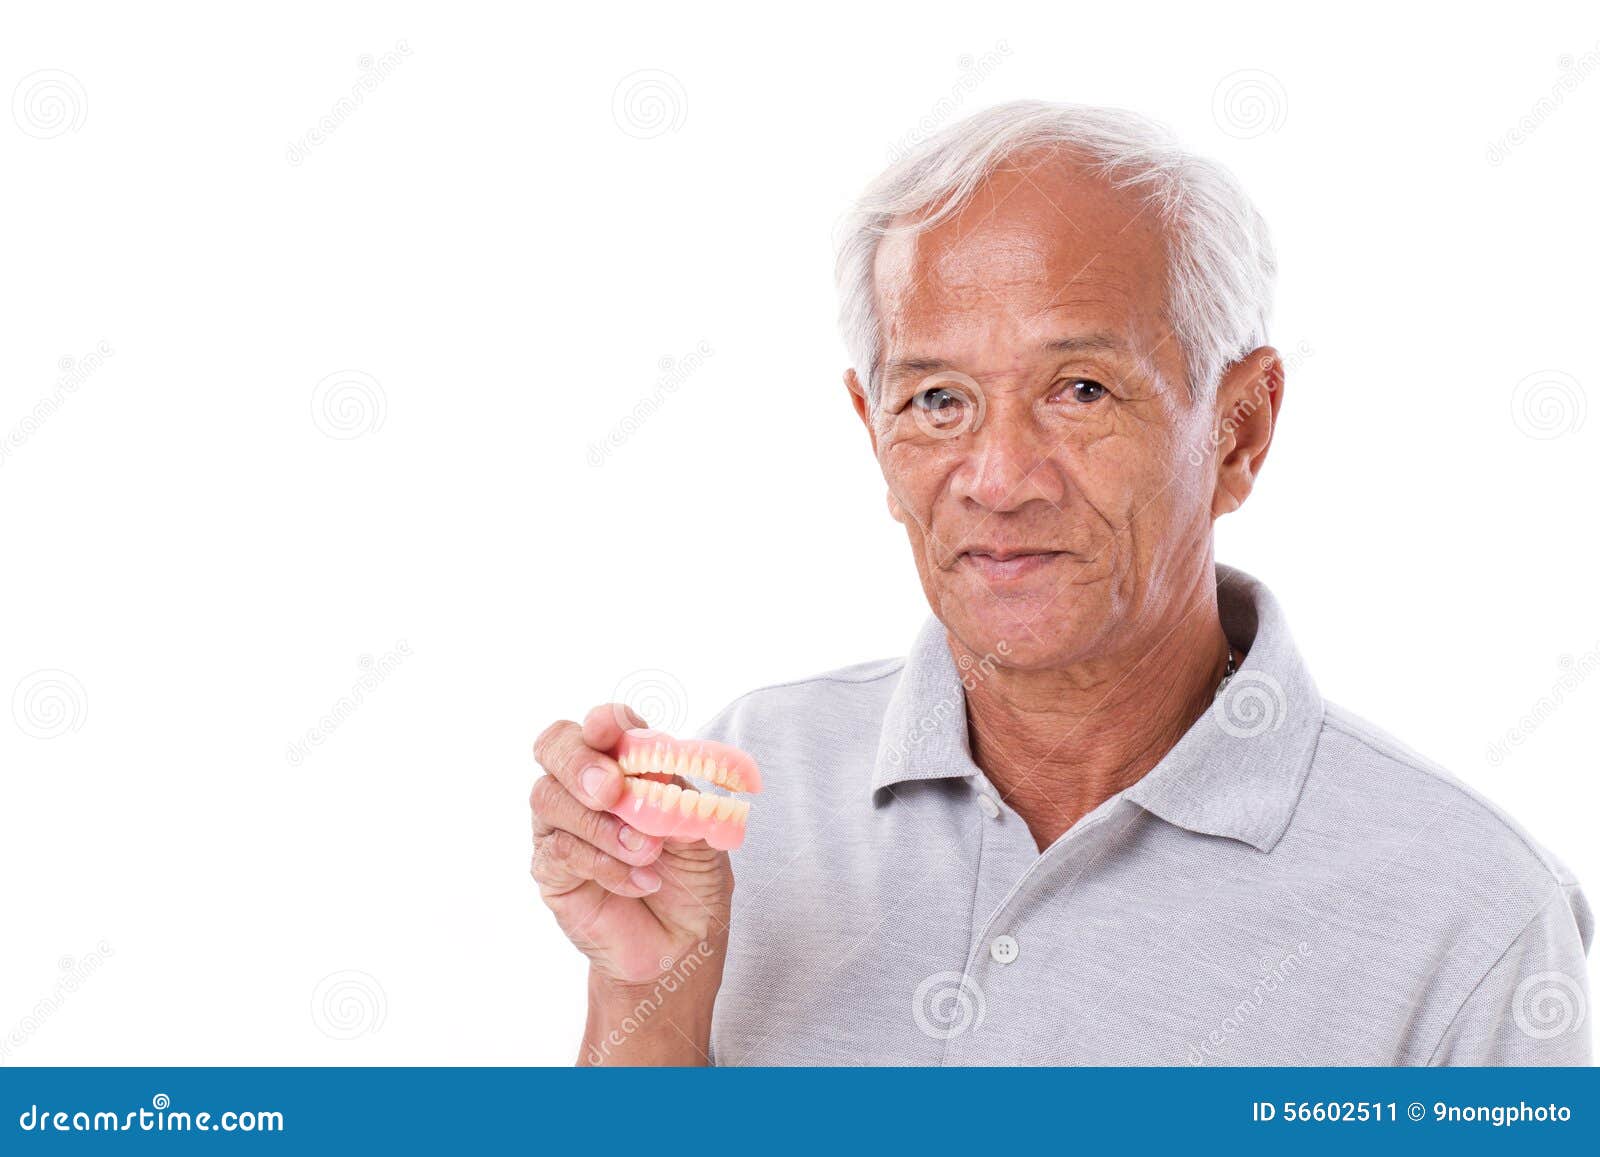 old senior man with hand holding denture